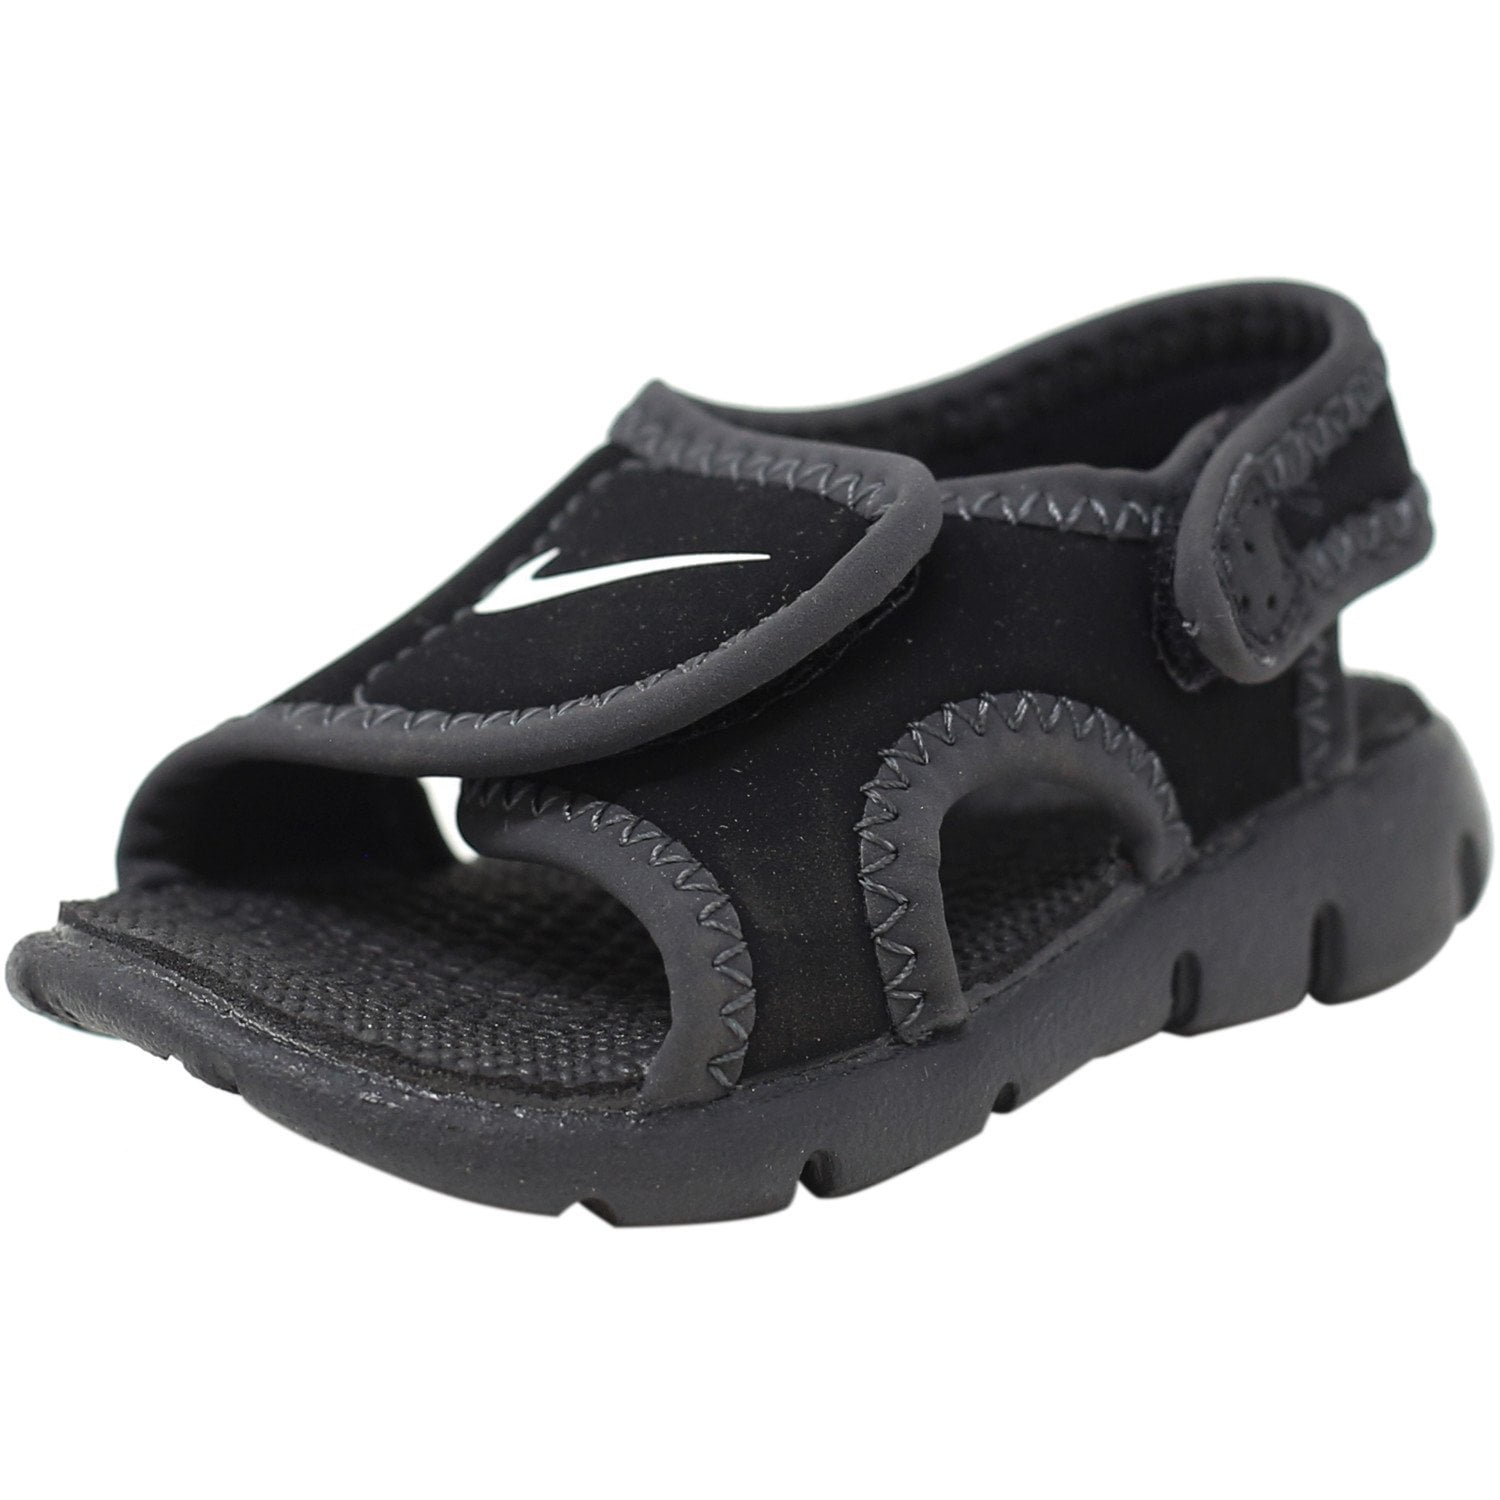 Roux Discreto Cuota de admisión Nike Sunray Adjust 4 Black / White - Anthracite Sandal 13M - Walmart.com